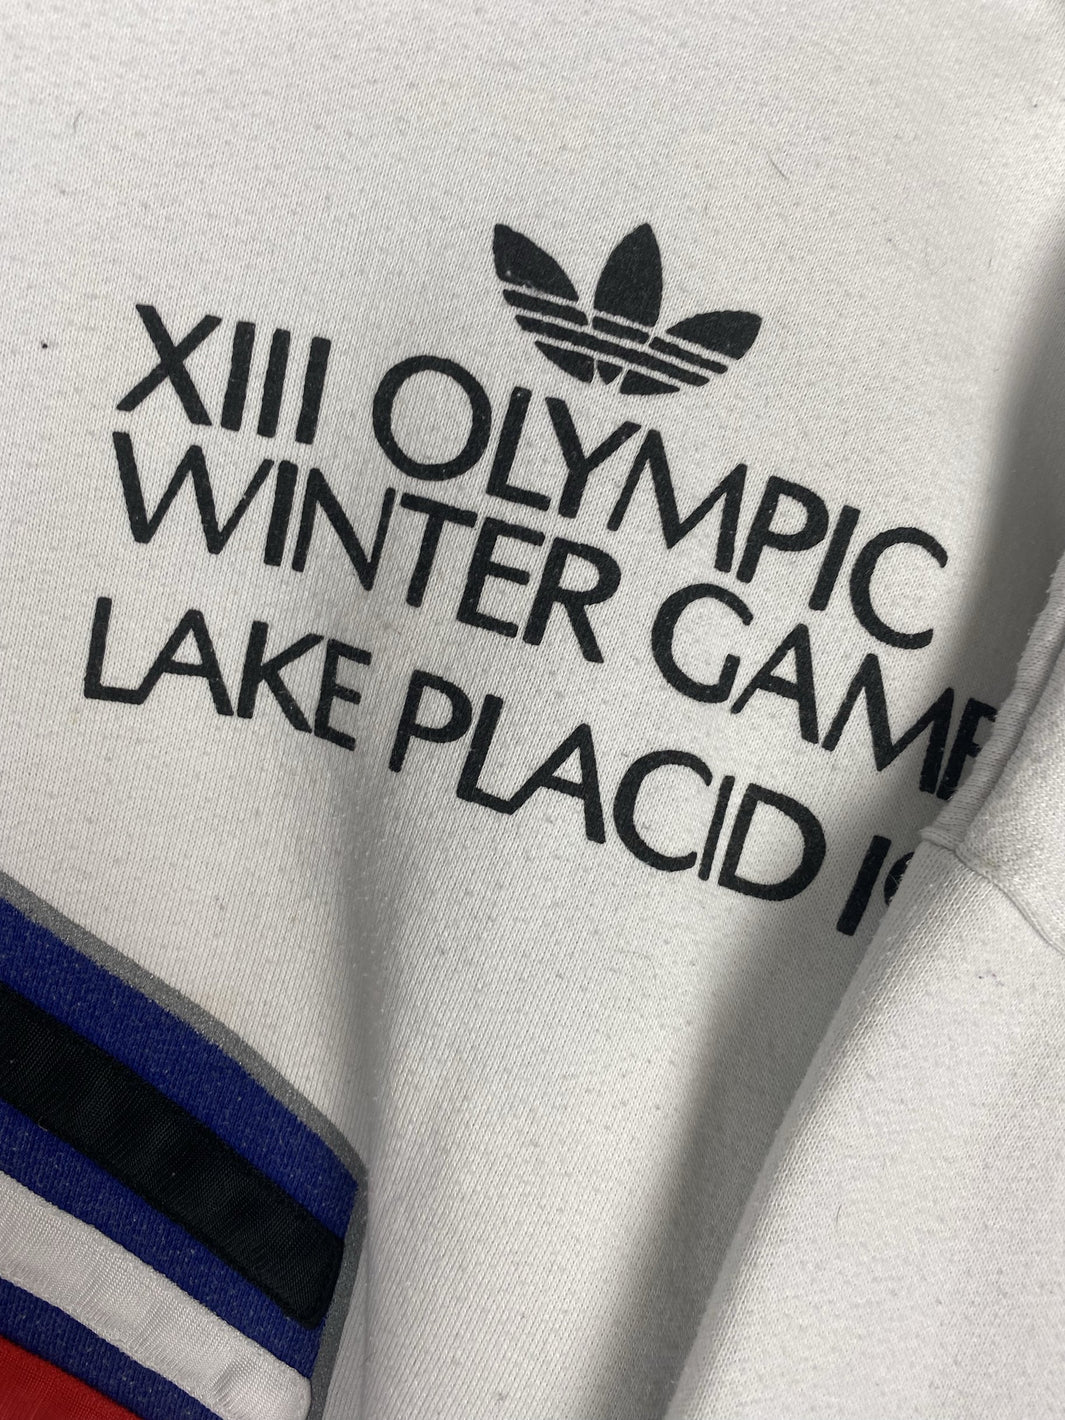 Adidas Olympia Sweater Lake Placid 1980